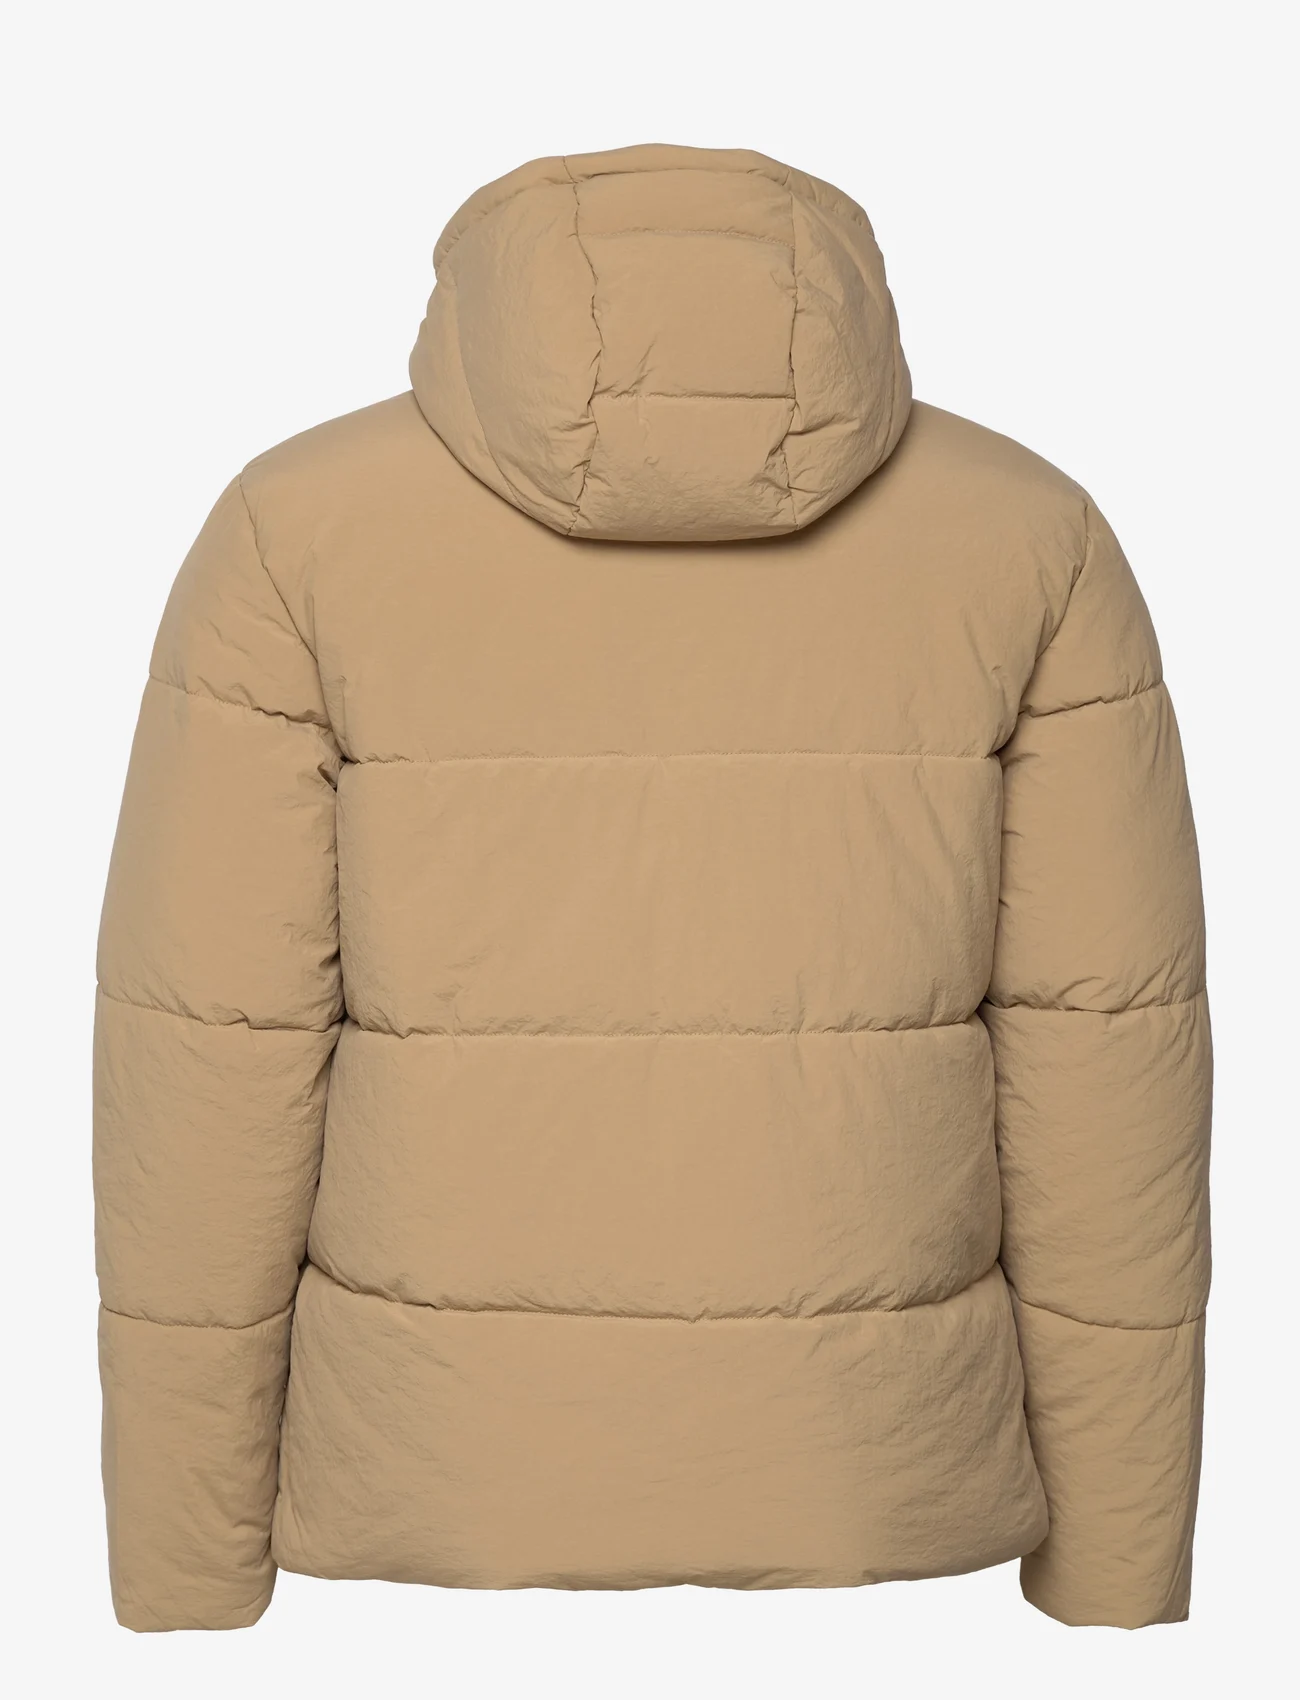 Champion Rochester - Hooded Jacket - winter jackets - cornstalk - 1